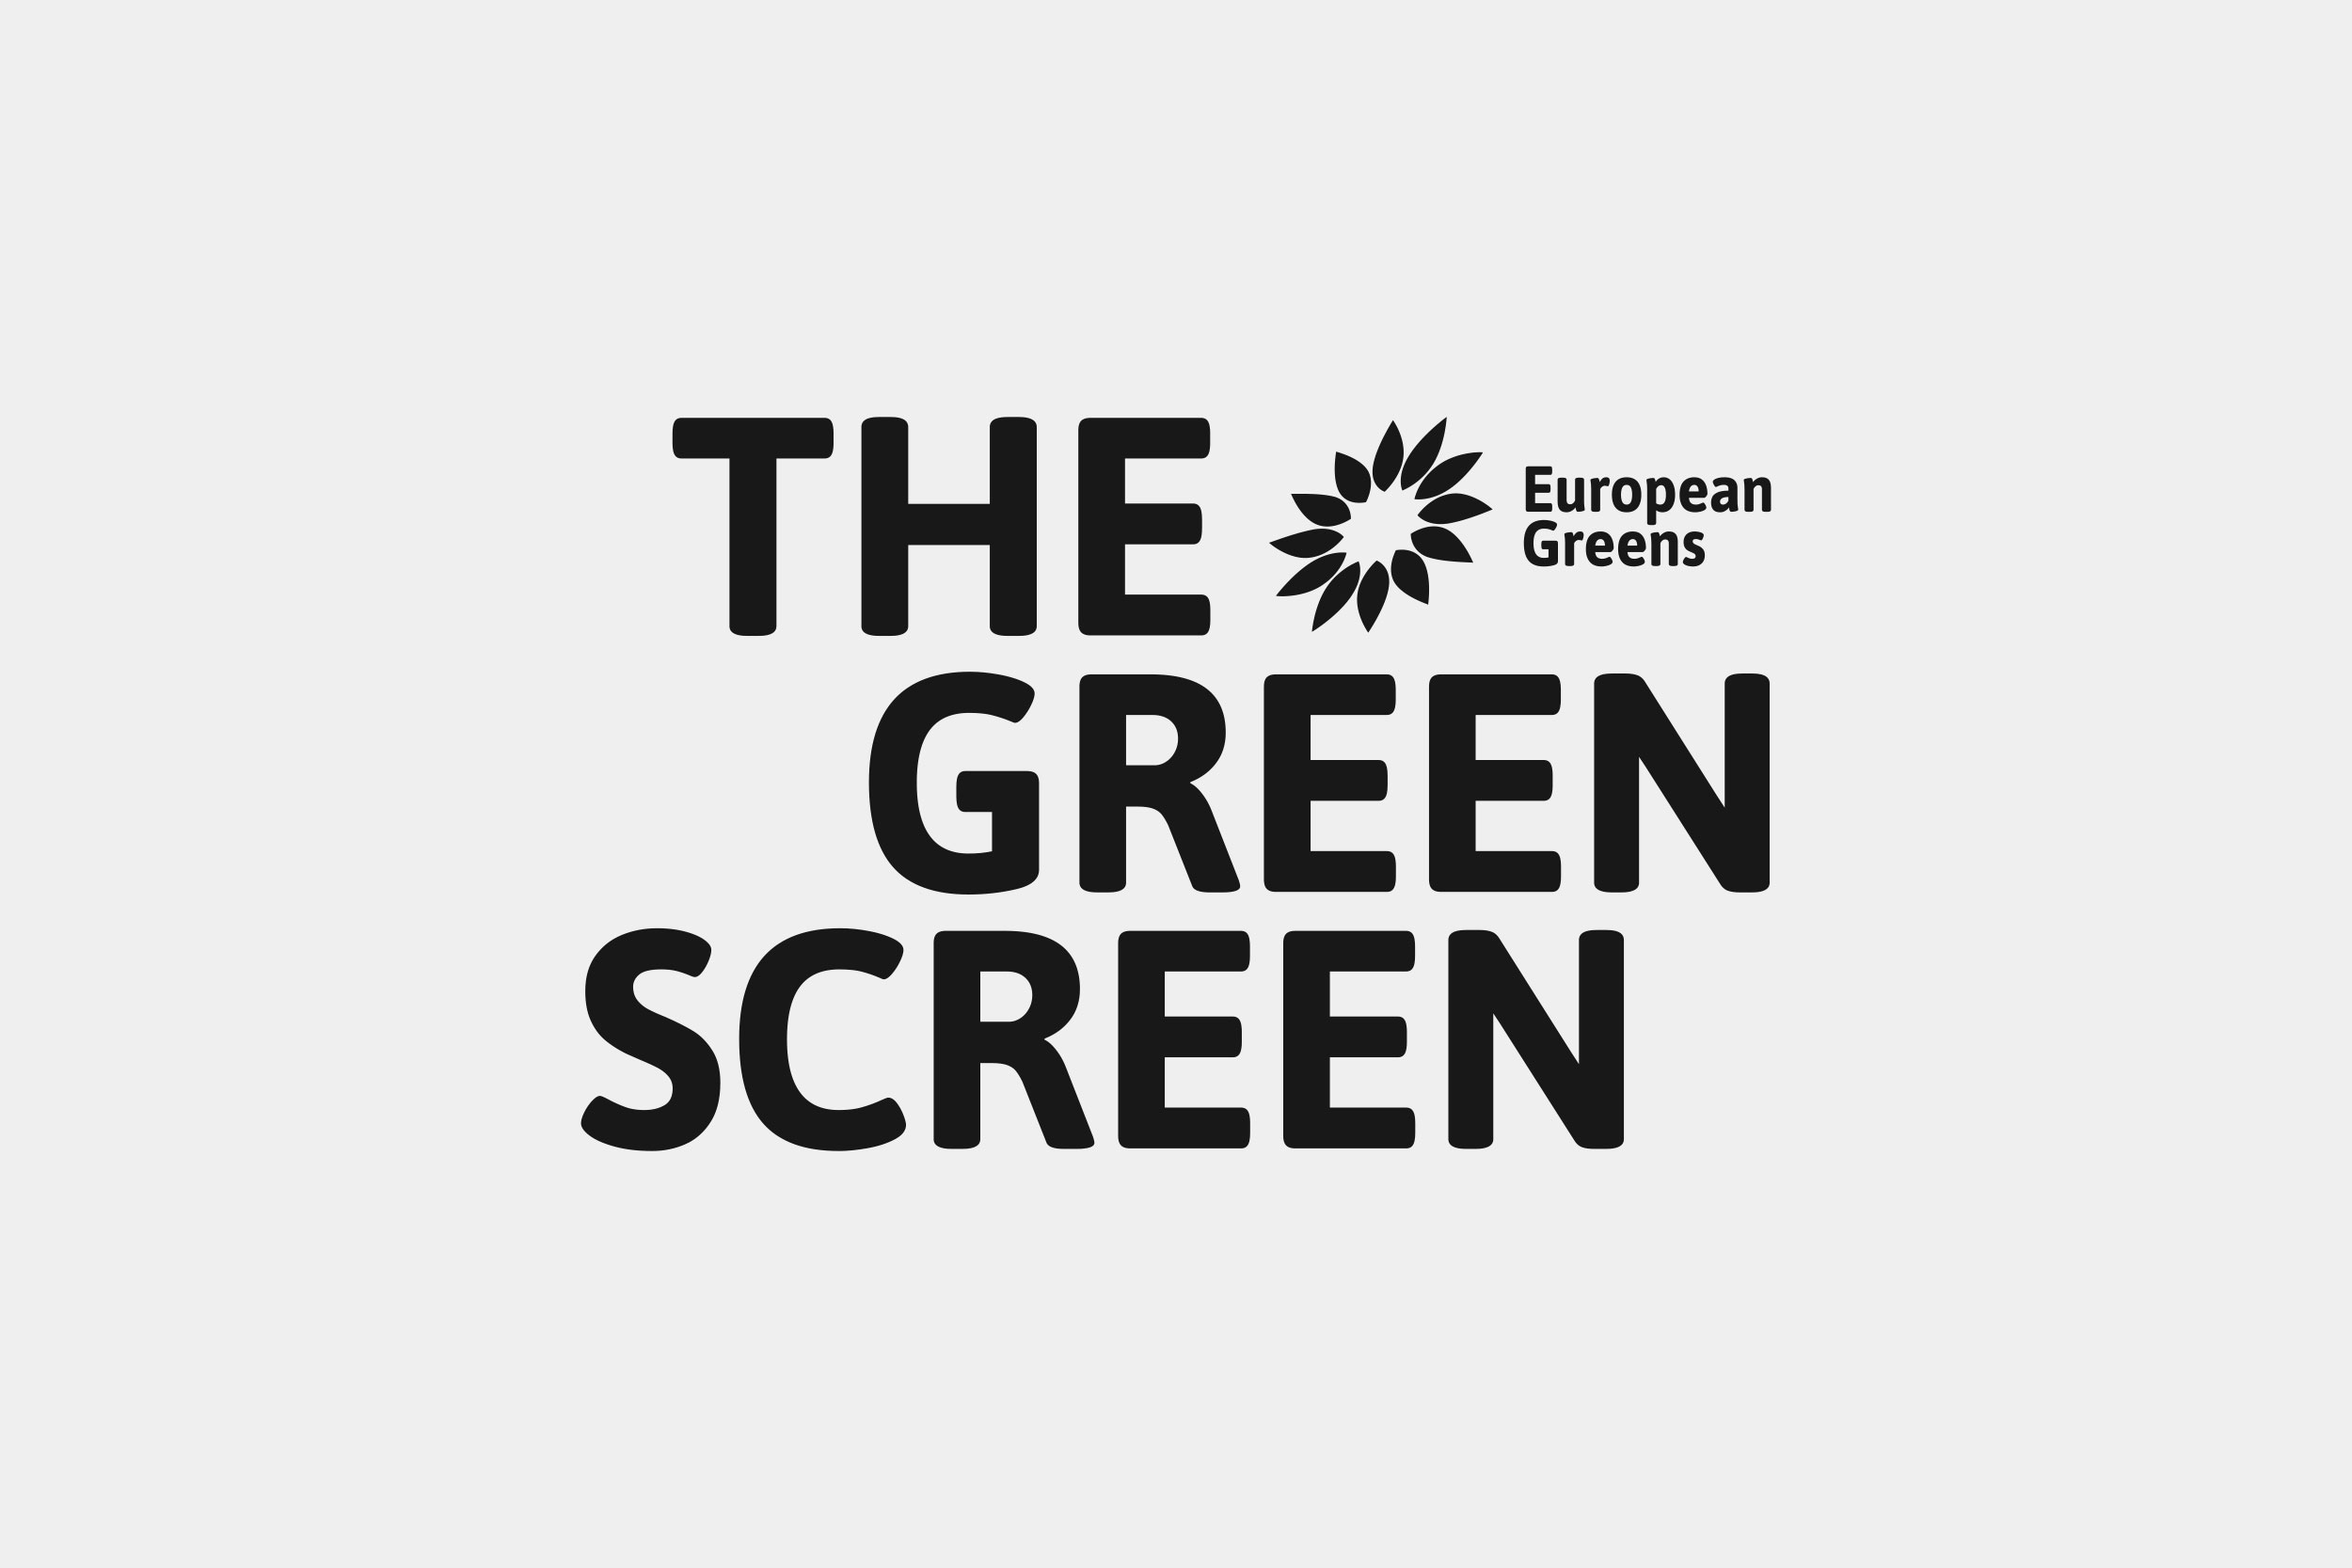 Porta-Disseny-Logos-The-Green-Screen-European-Greens-02